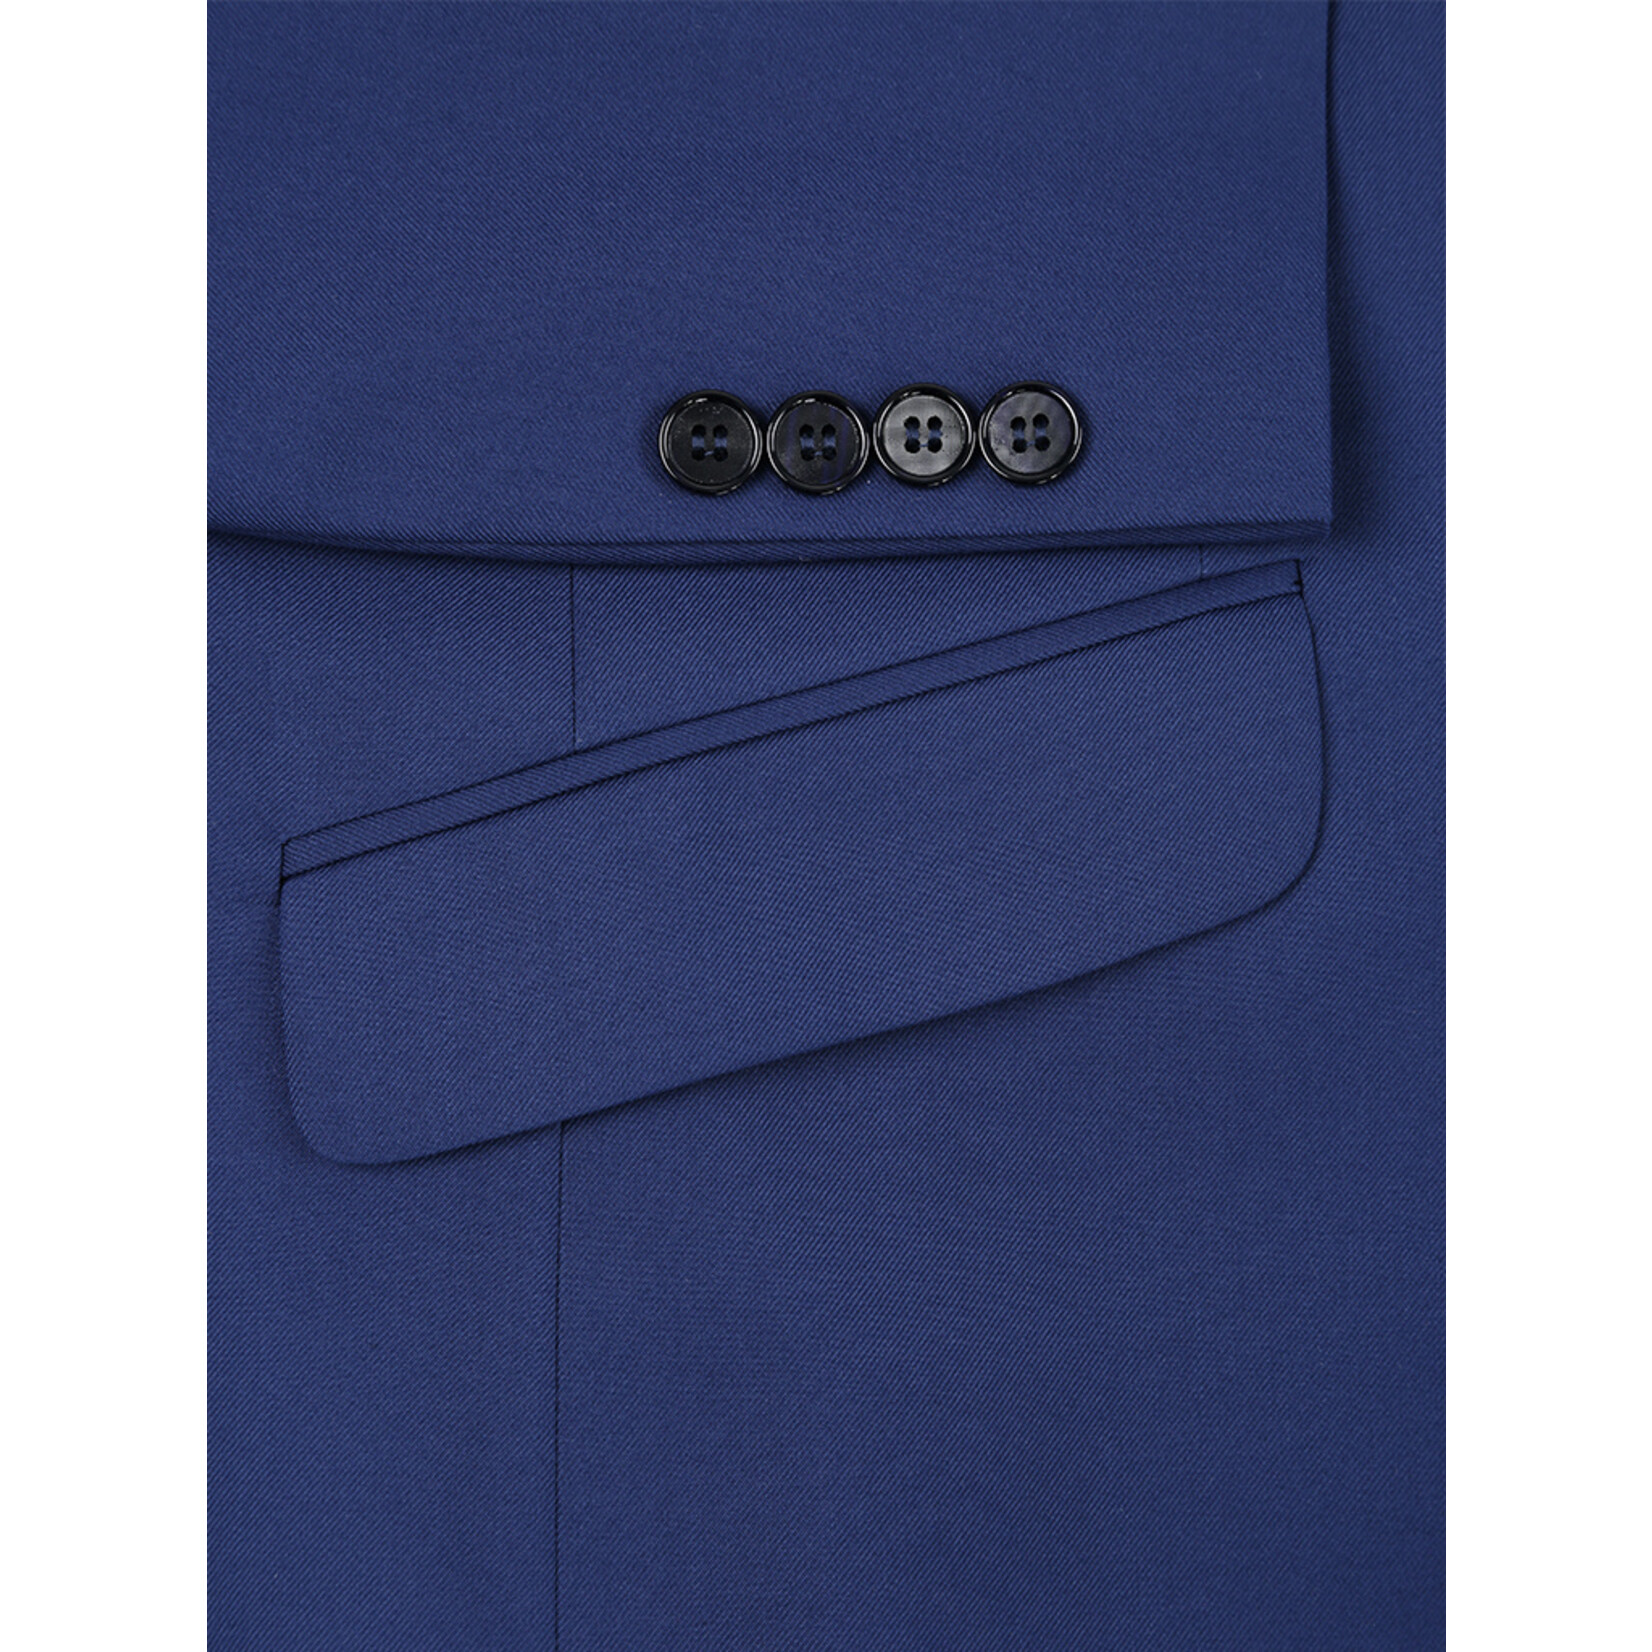 Renoir Renoir Slim Fit Suit 201-20 Electric Blue